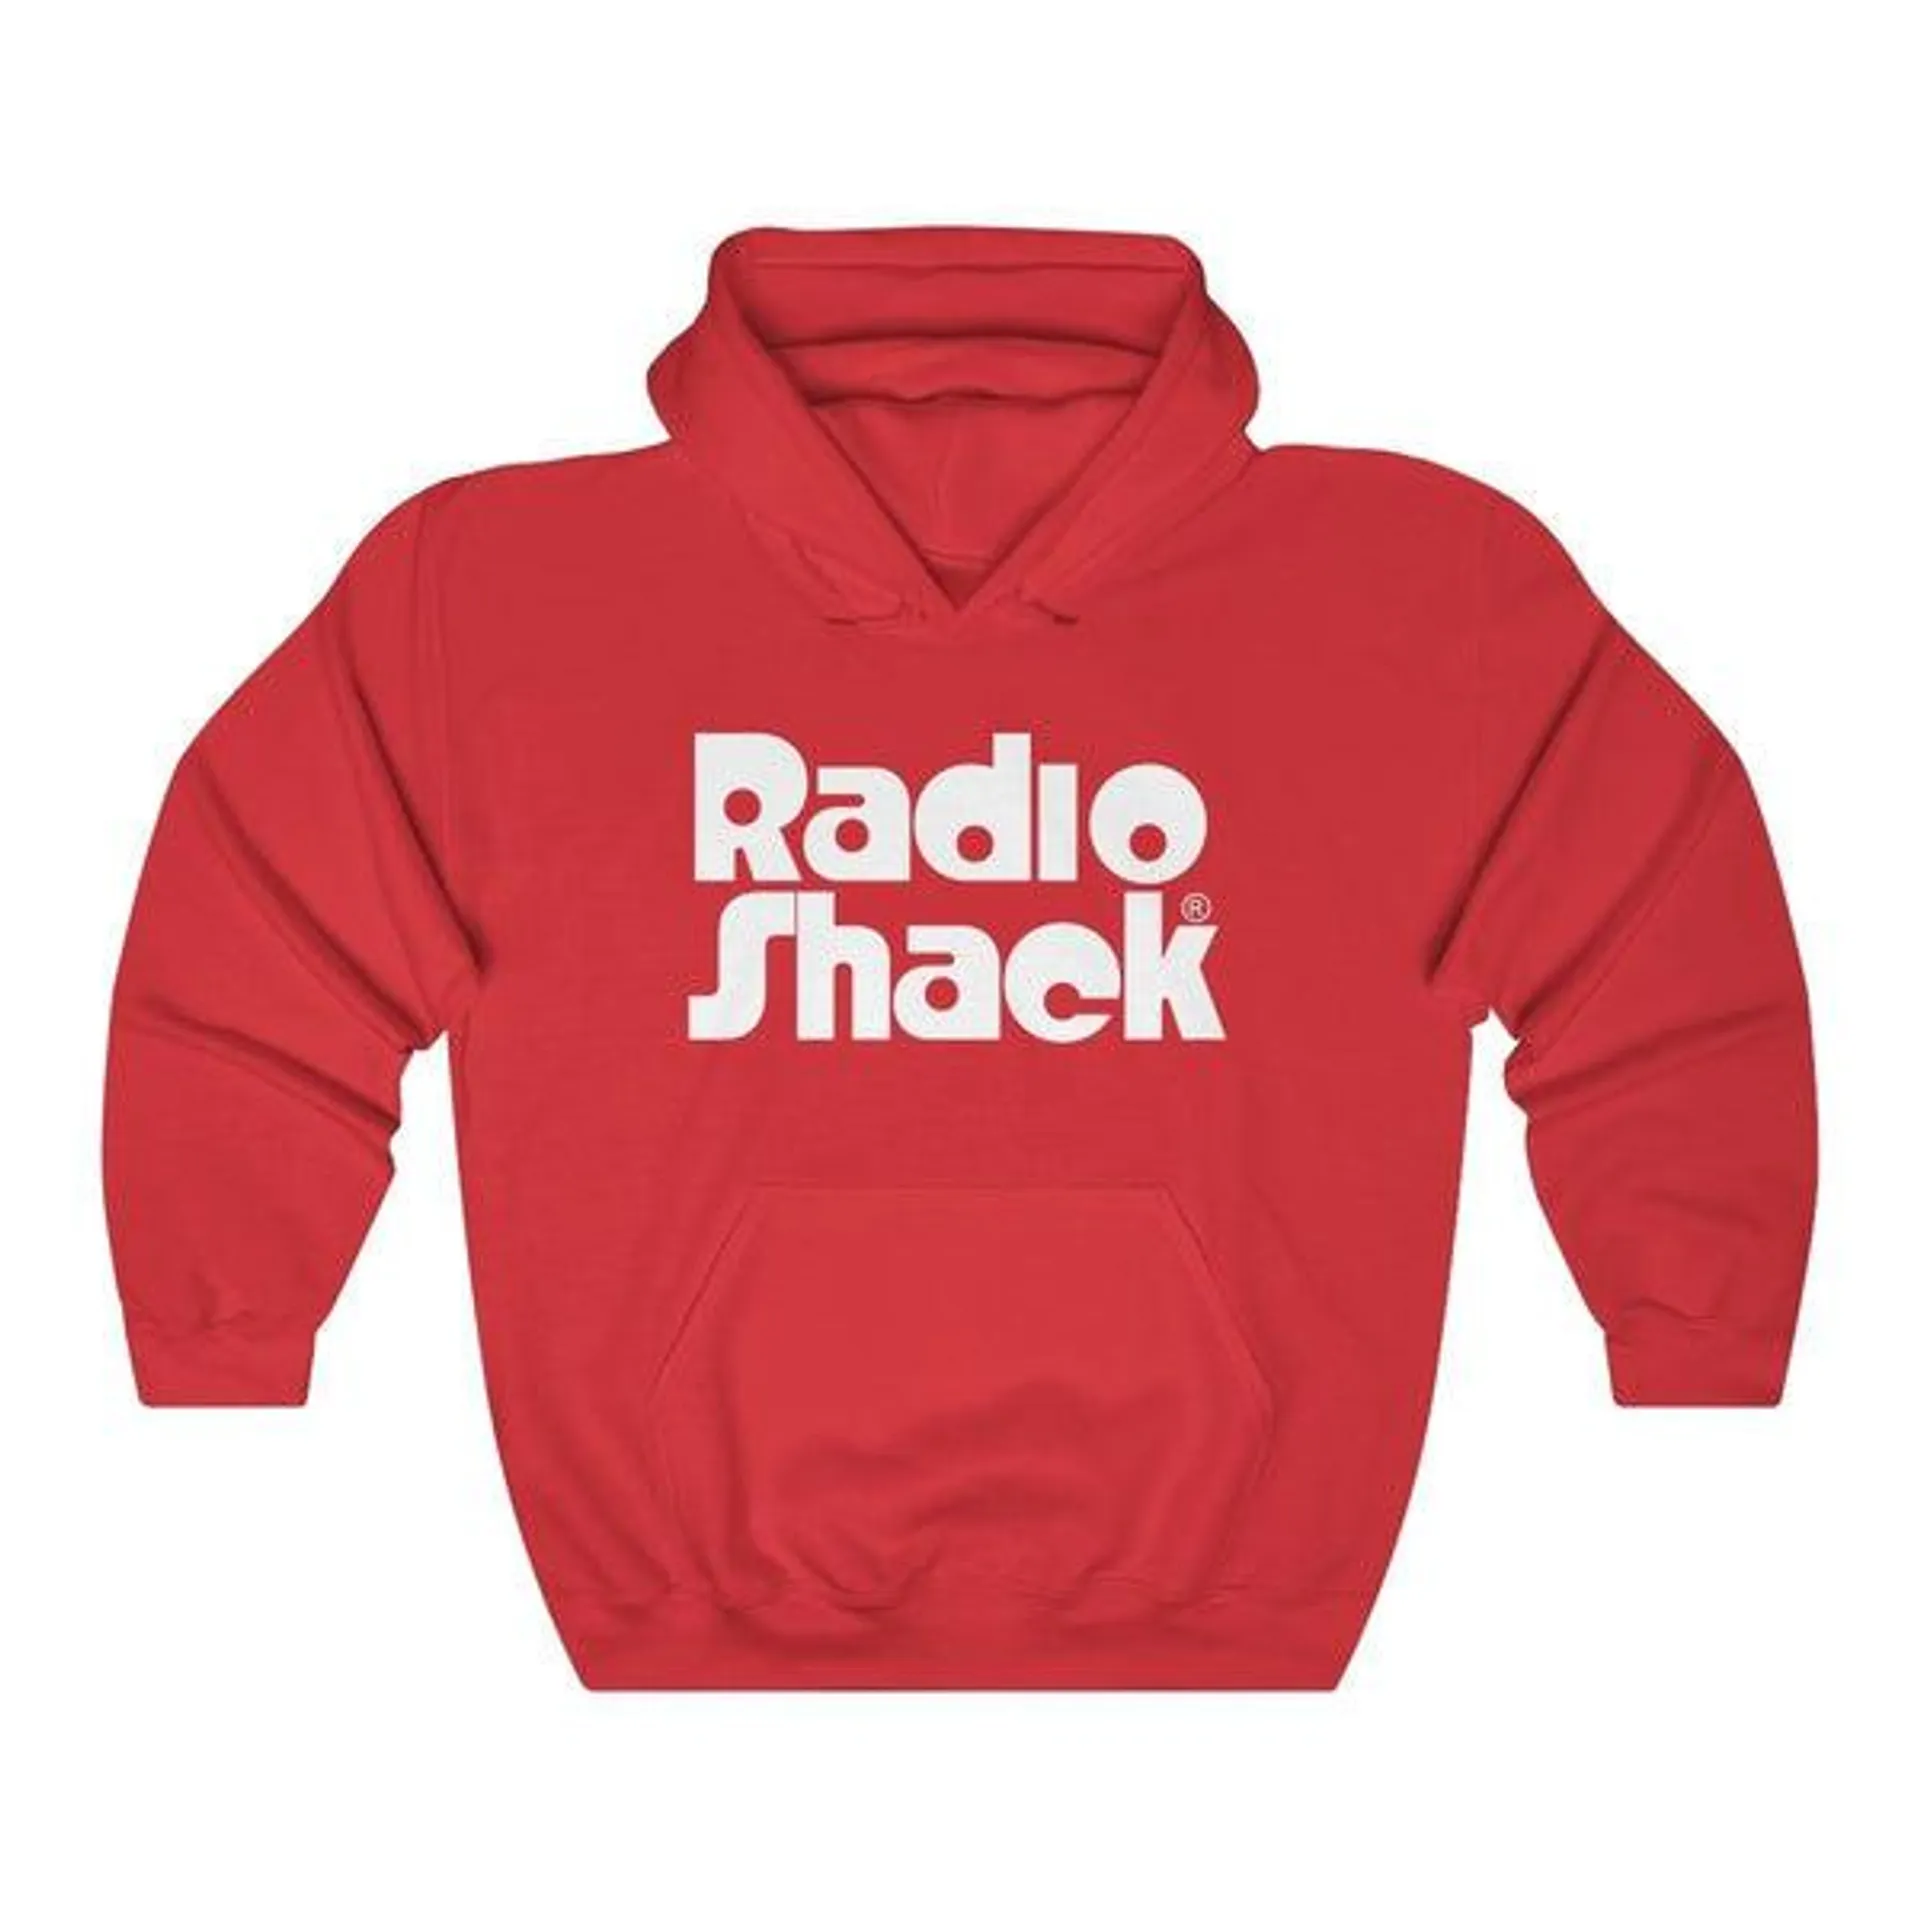 Retro RadioShack Hooded Sweatshirt with Stacked Logo